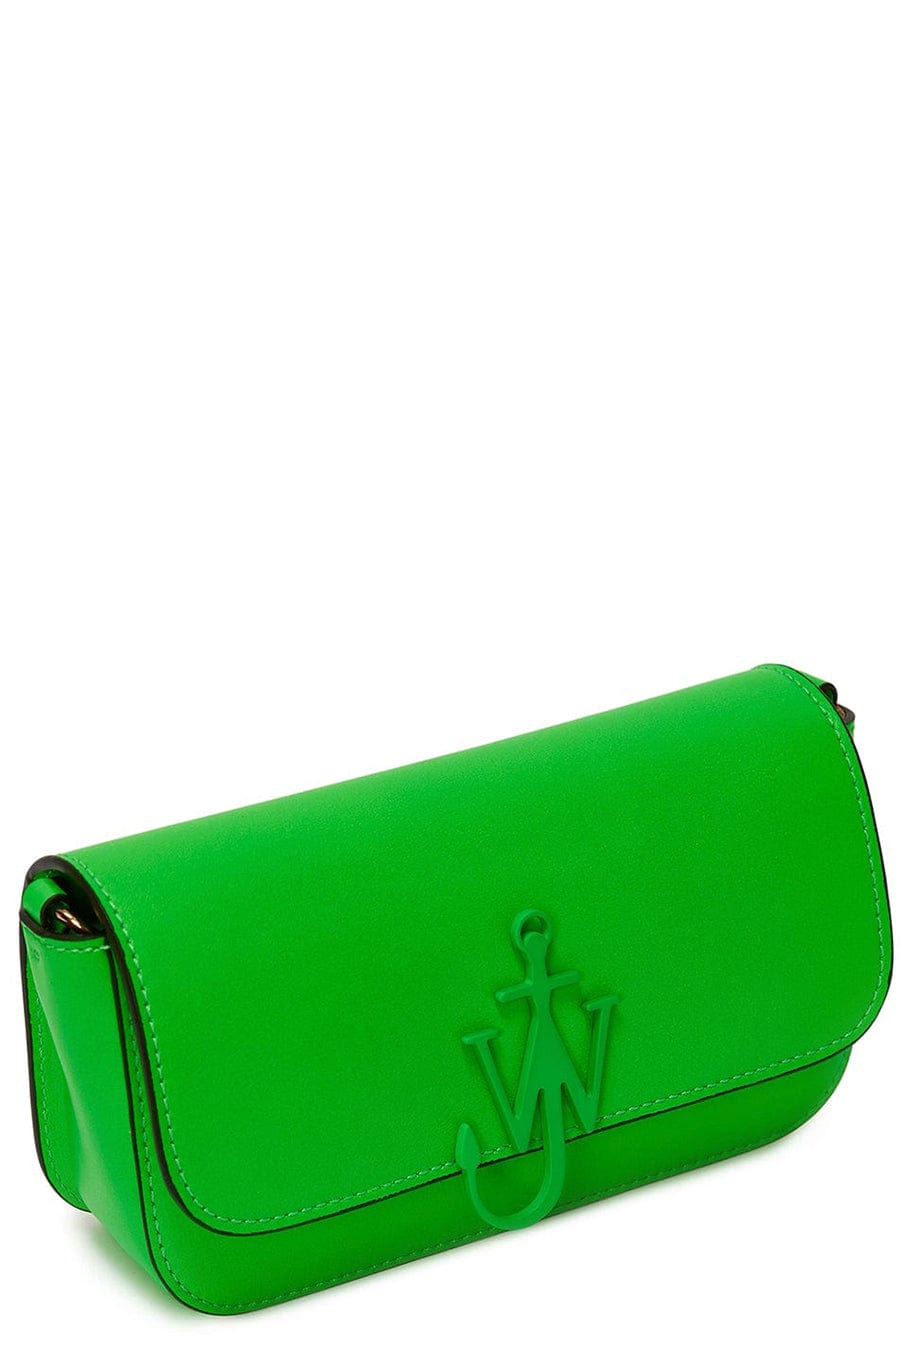 JW ANDERSON-Chain Baguette Anchor Bag - Neon Green-NEON GREEN